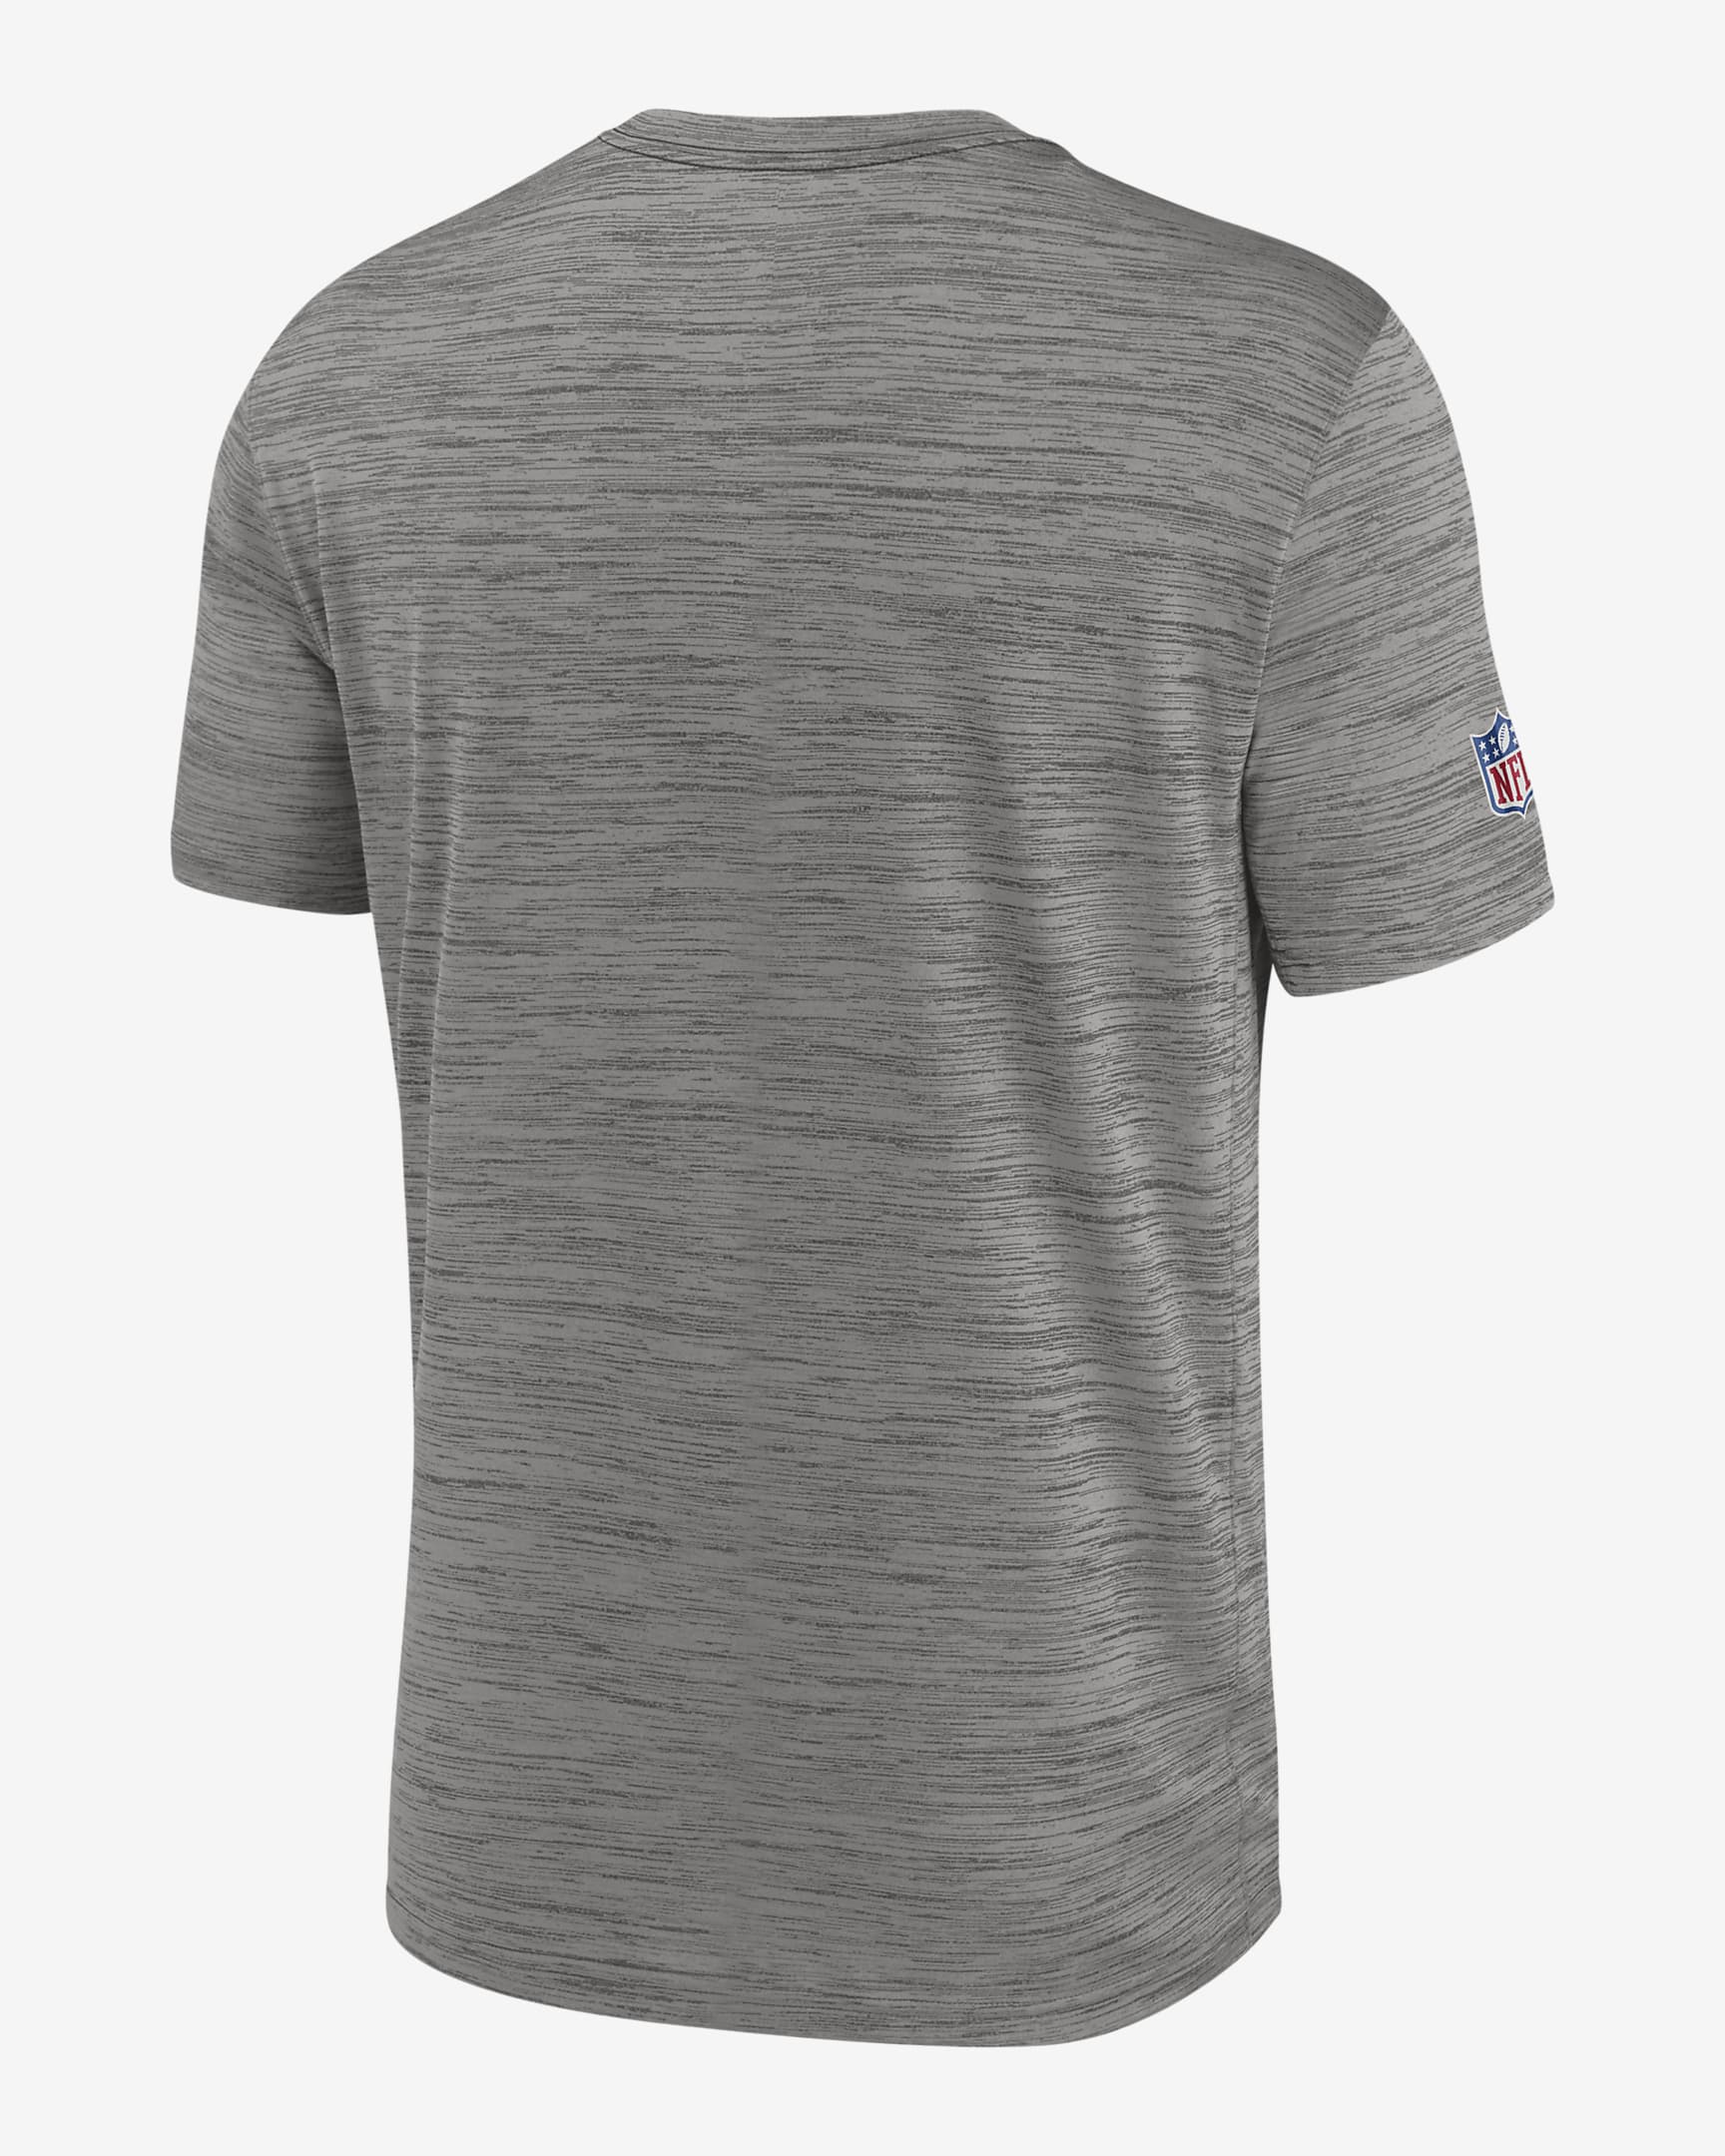 Nike Dri-FIT Team (NFL Atlanta Falcons) Men's T-Shirt. Nike.com